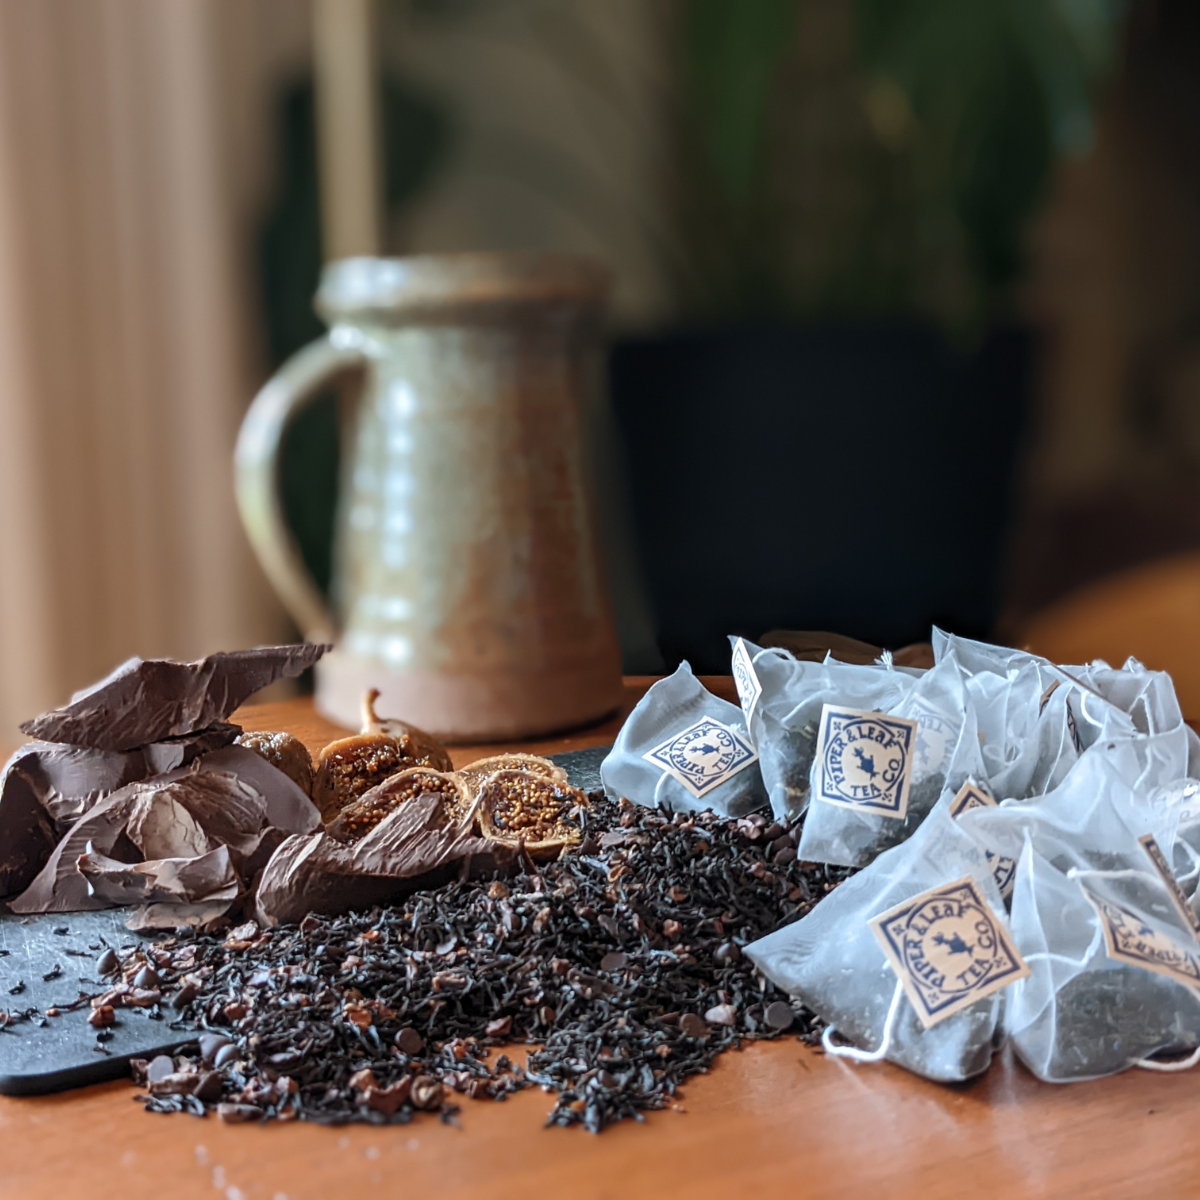 chocola-tea sachets next to mug and ingredients